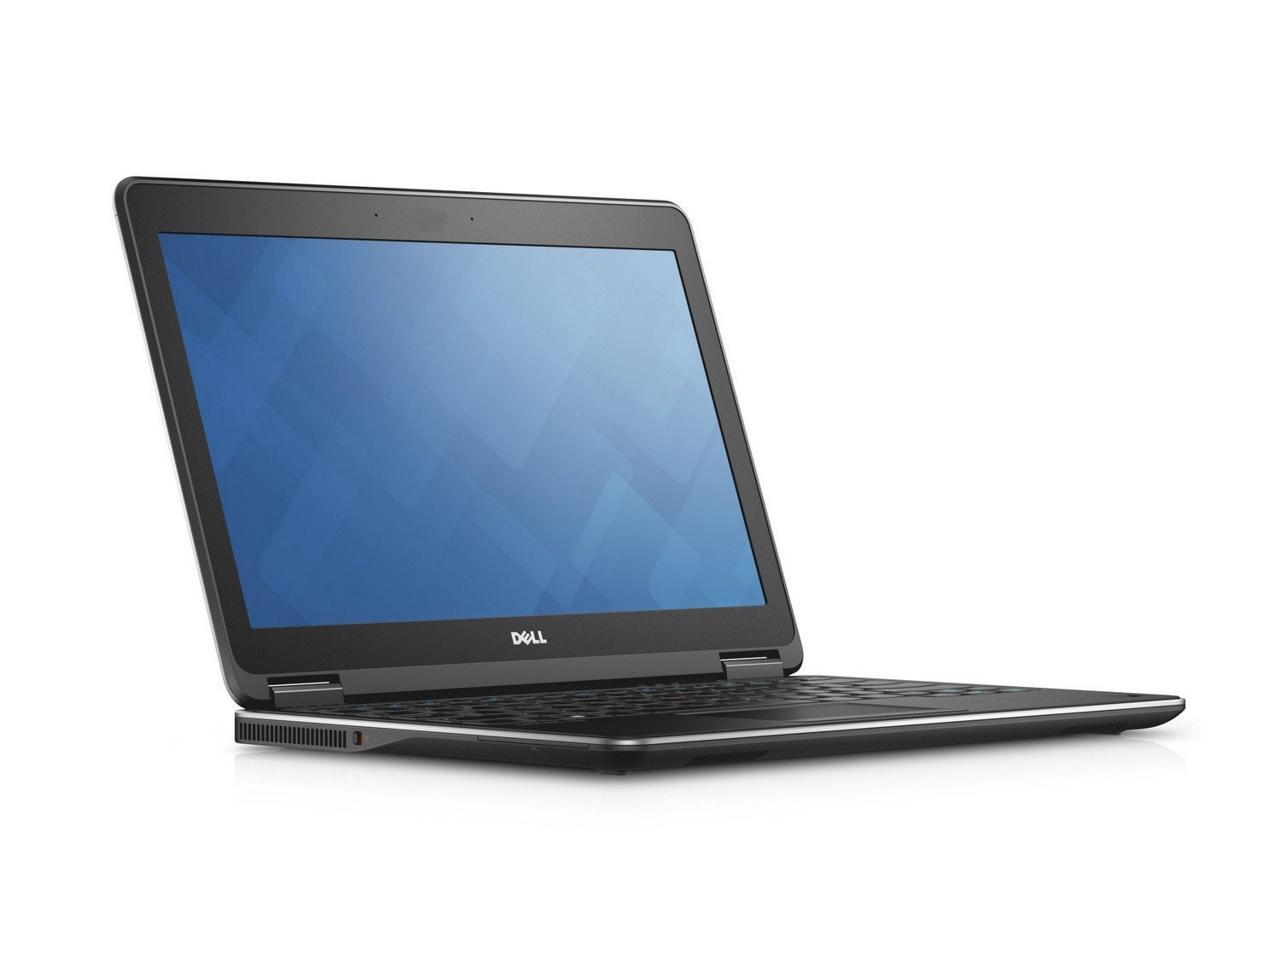 Dell Latitude E7250 12.5 in Laptop - Intel Core i5 5300U 5th Gen 2.3 GHz 8GB 256GB SSD Windows 10 Pro 64-Bit - Webcam